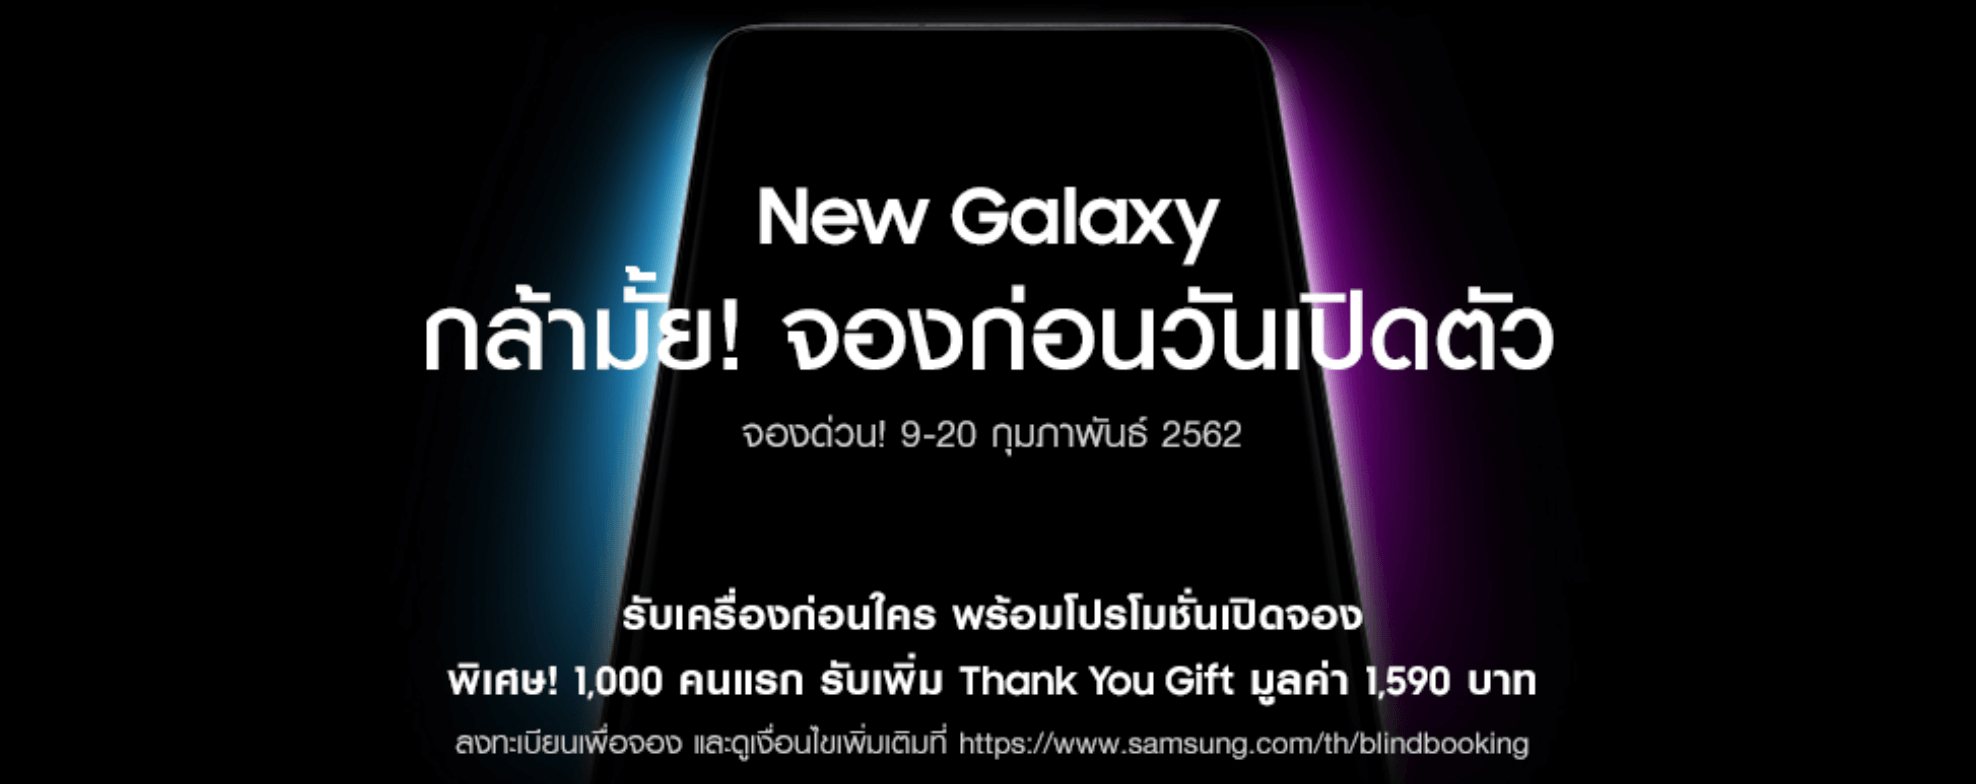 Samsung Galaxy S10 Pre-order in Thailand